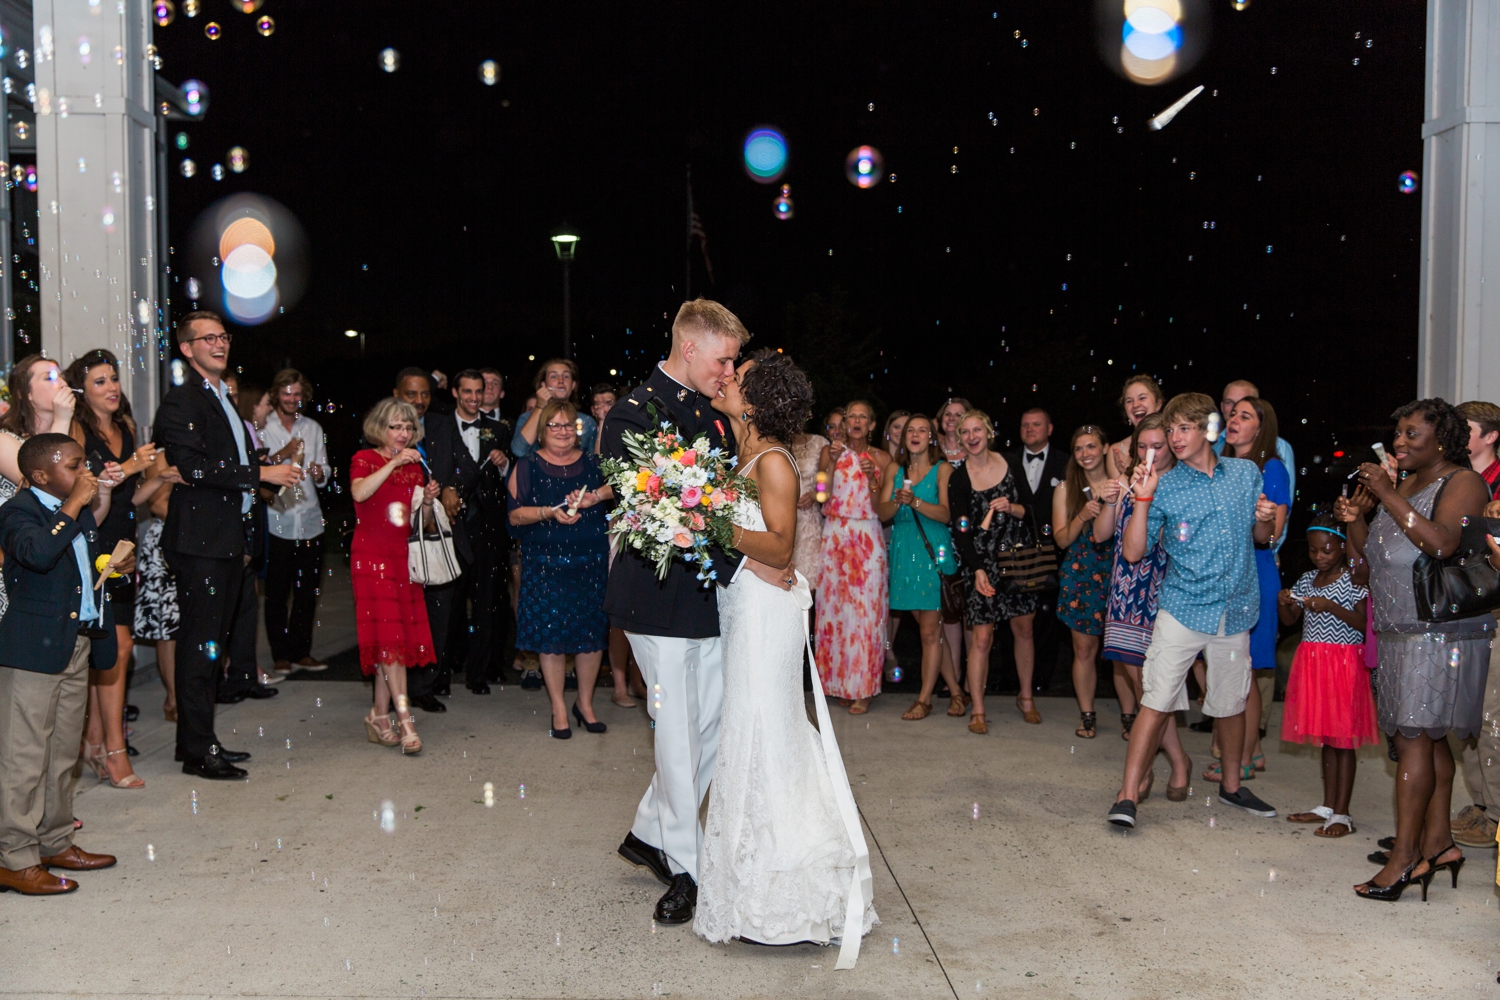 Wedding-at-The-Savannah-Center-West-Chester-Ohio-Photography-Chloe-Luka-Photography_7575.jpg